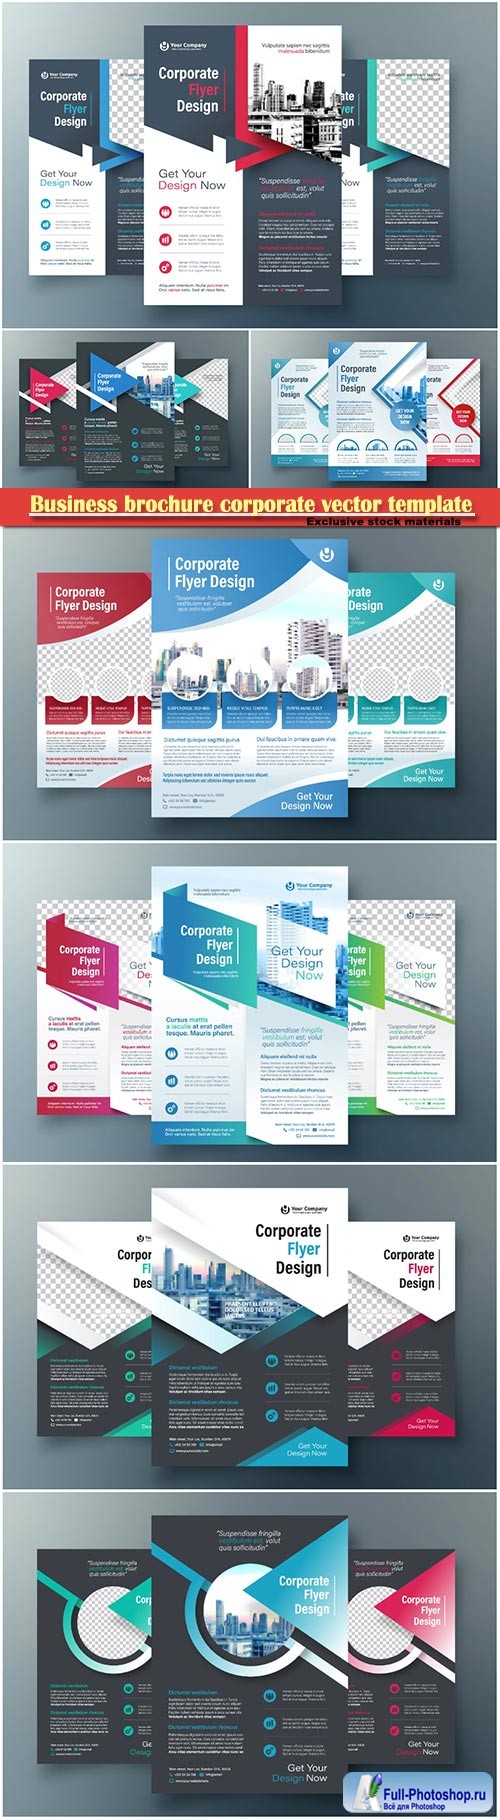 Business brochure corporate vector template, magazine flyer mockup # 11